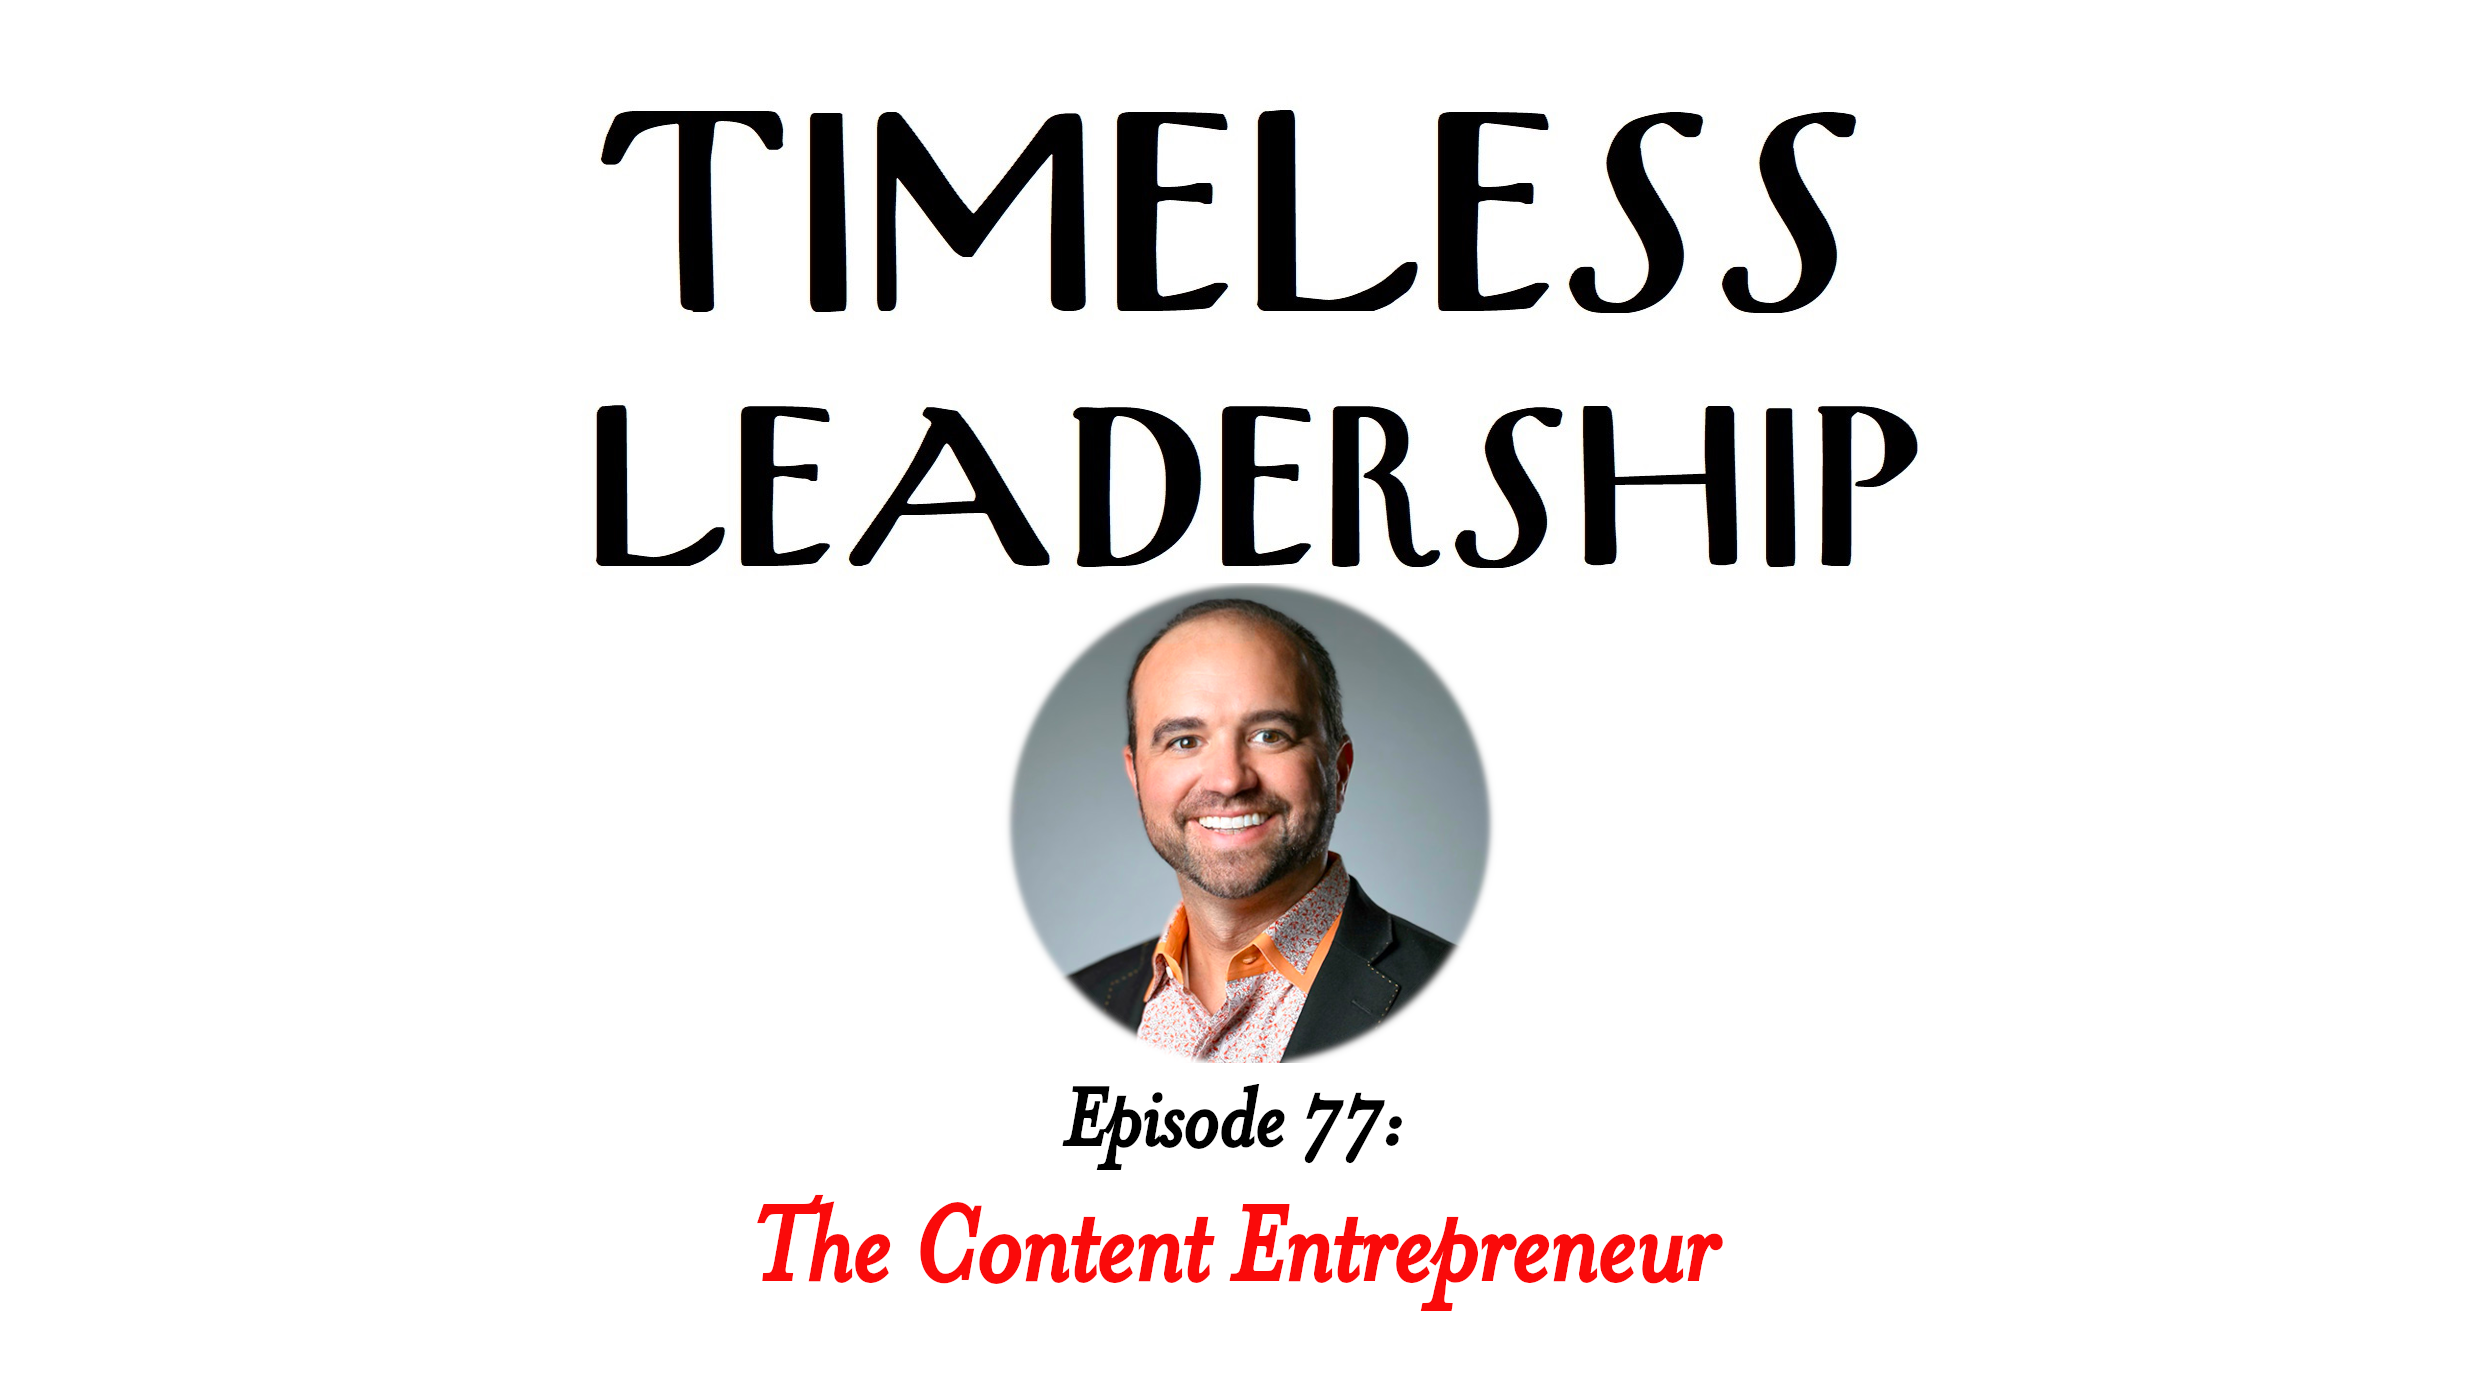 Episode 77: The Content Entrepreneur with Joe Pulizzi